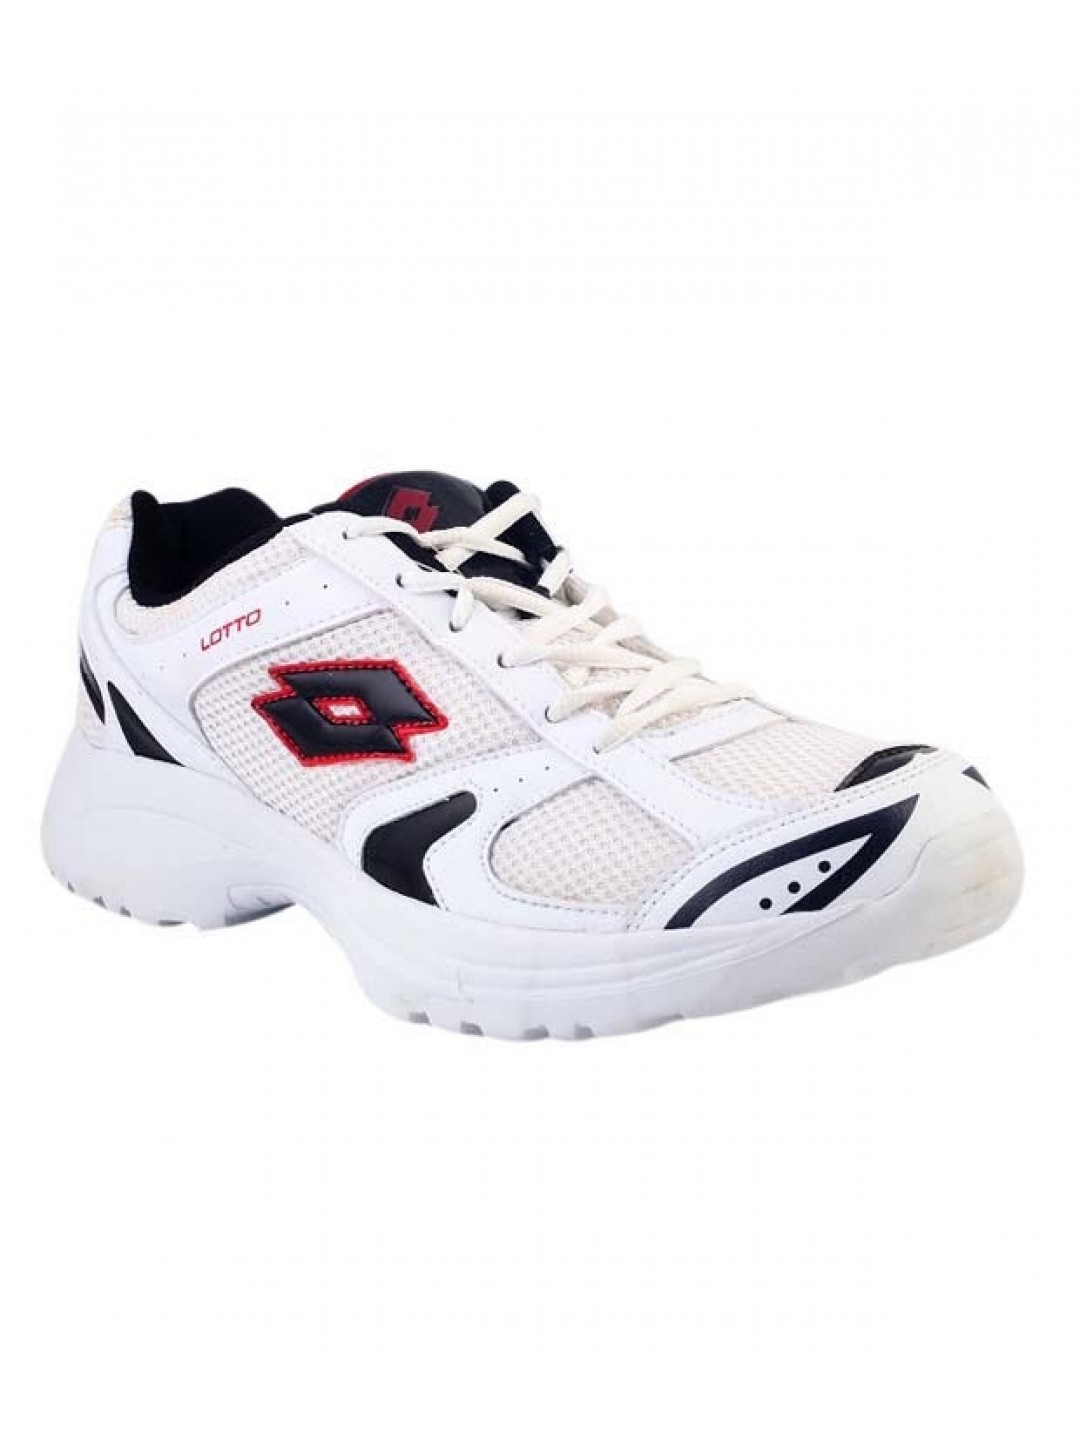 lotto sports shoes 999